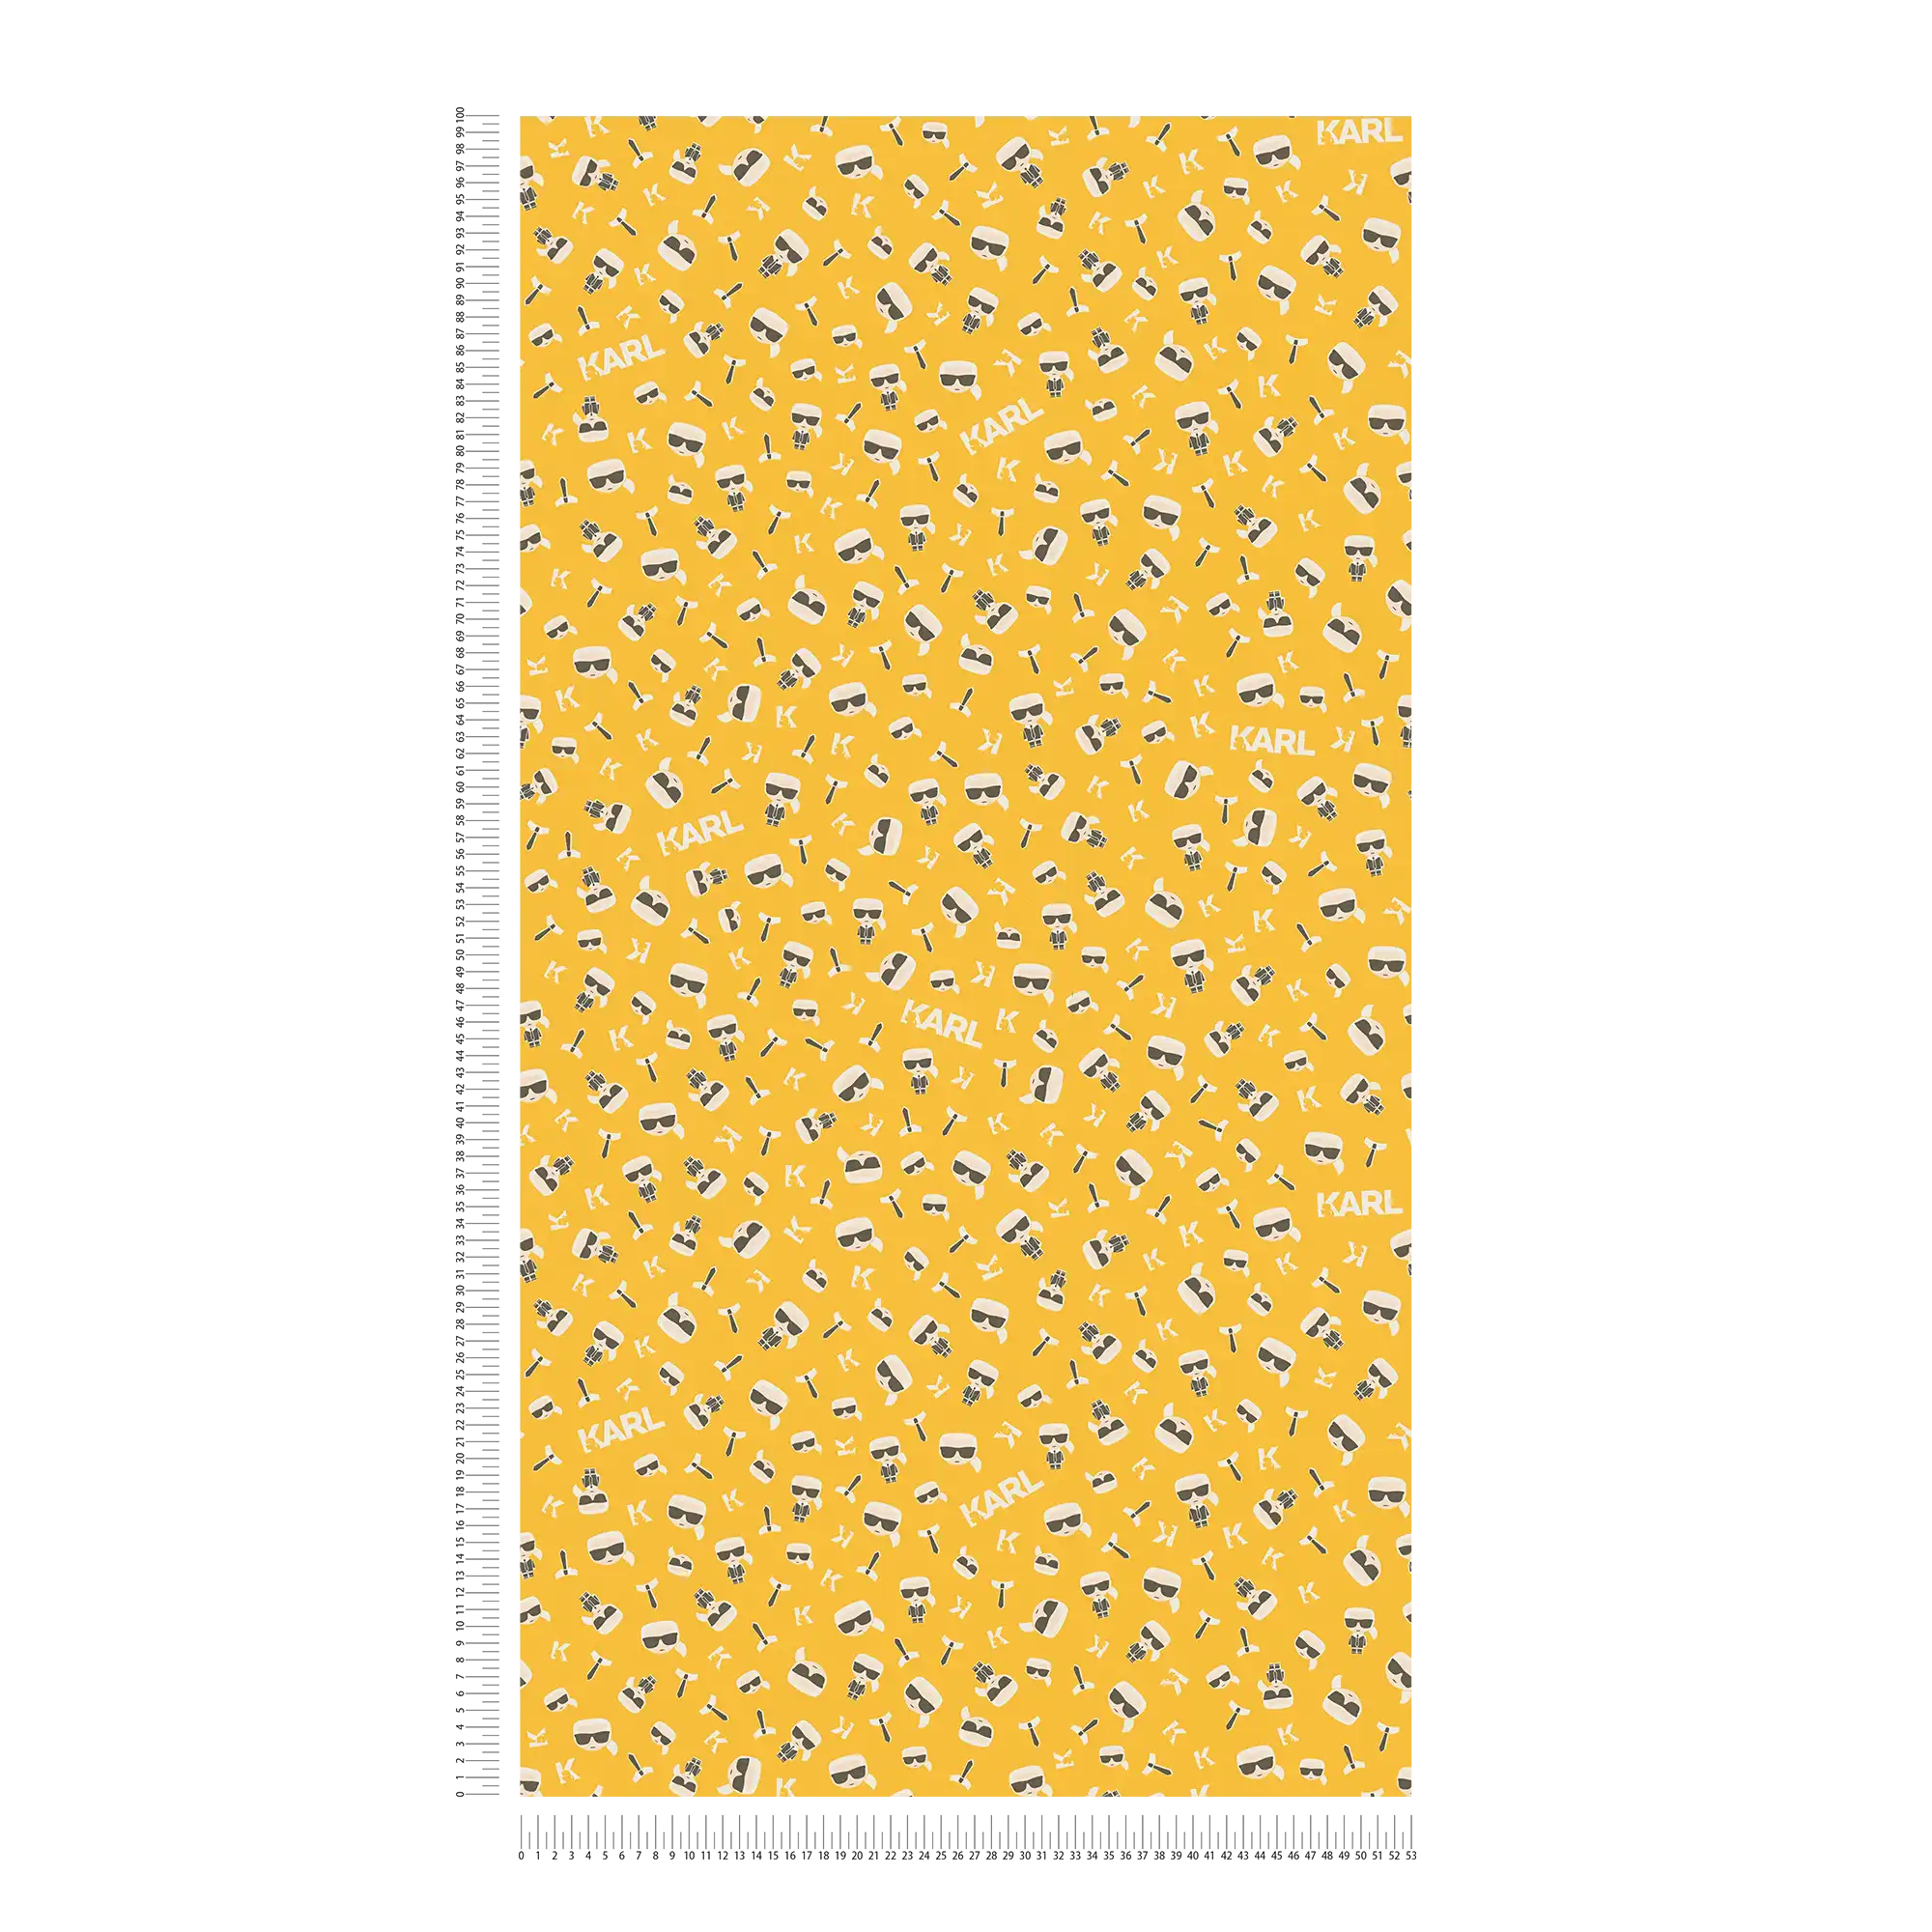             Non-woven wallpaper Karl LAGERFELD comic design - yellow
        